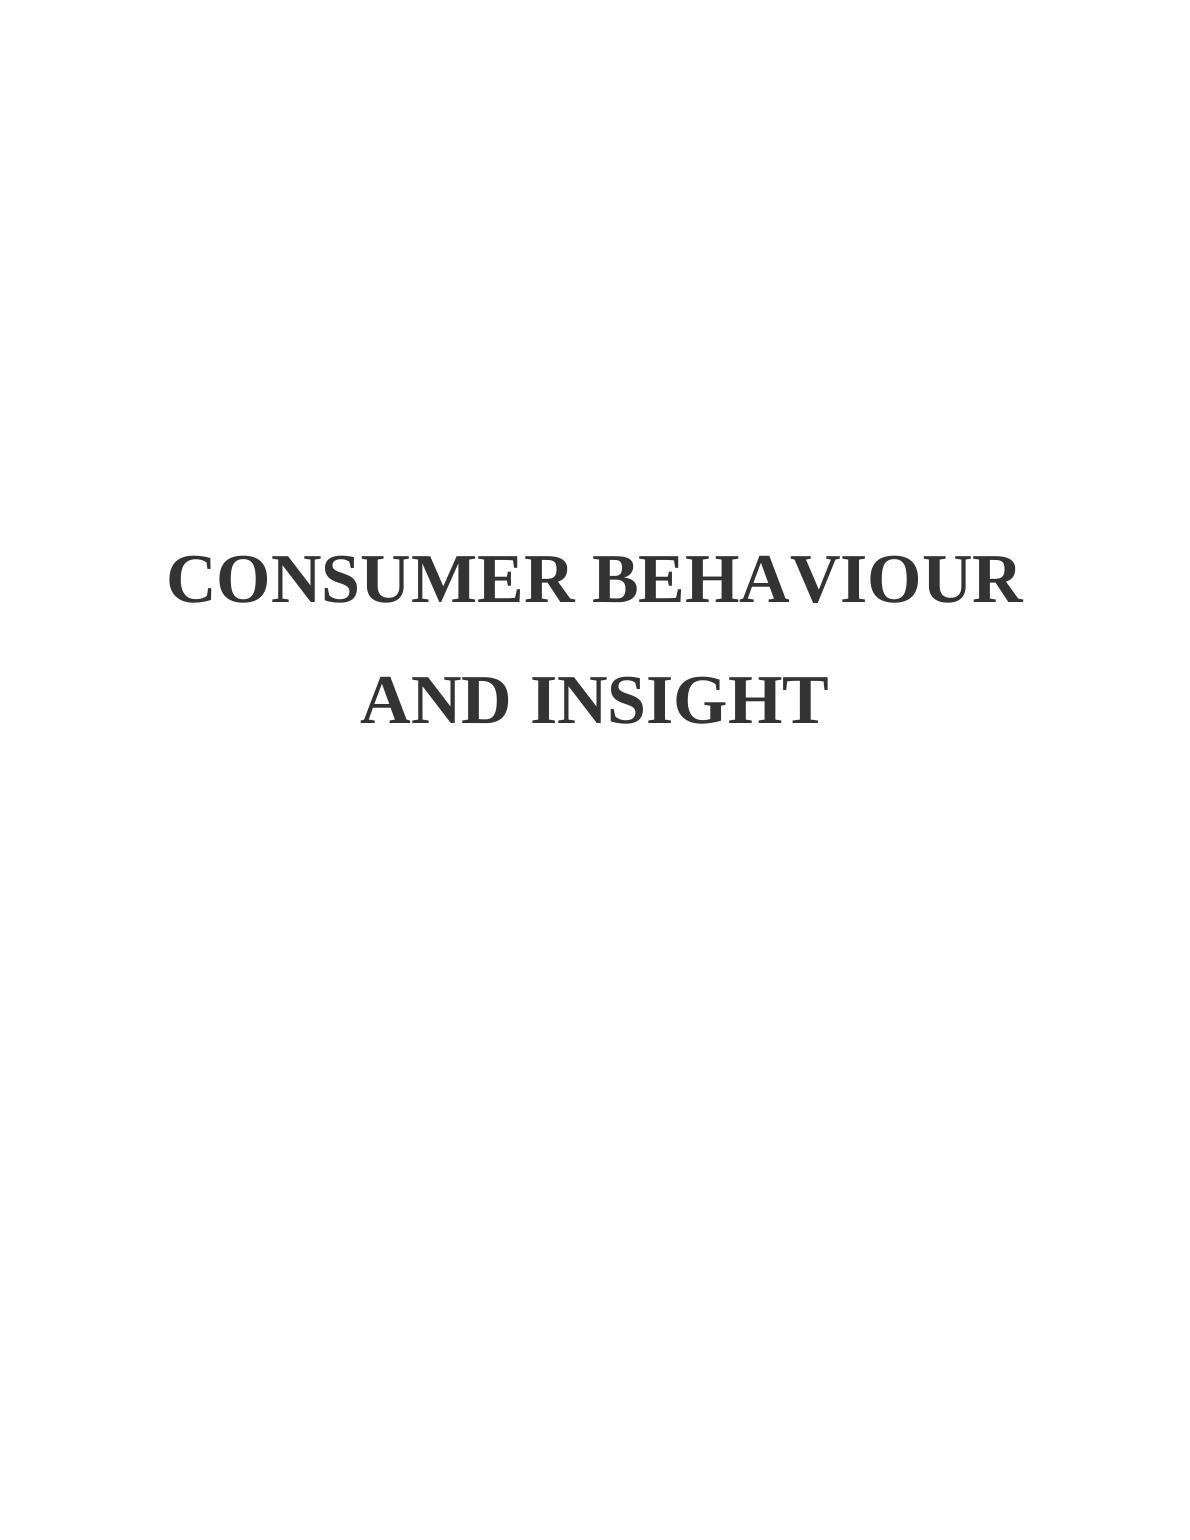 consumer behaviour and insight assignment